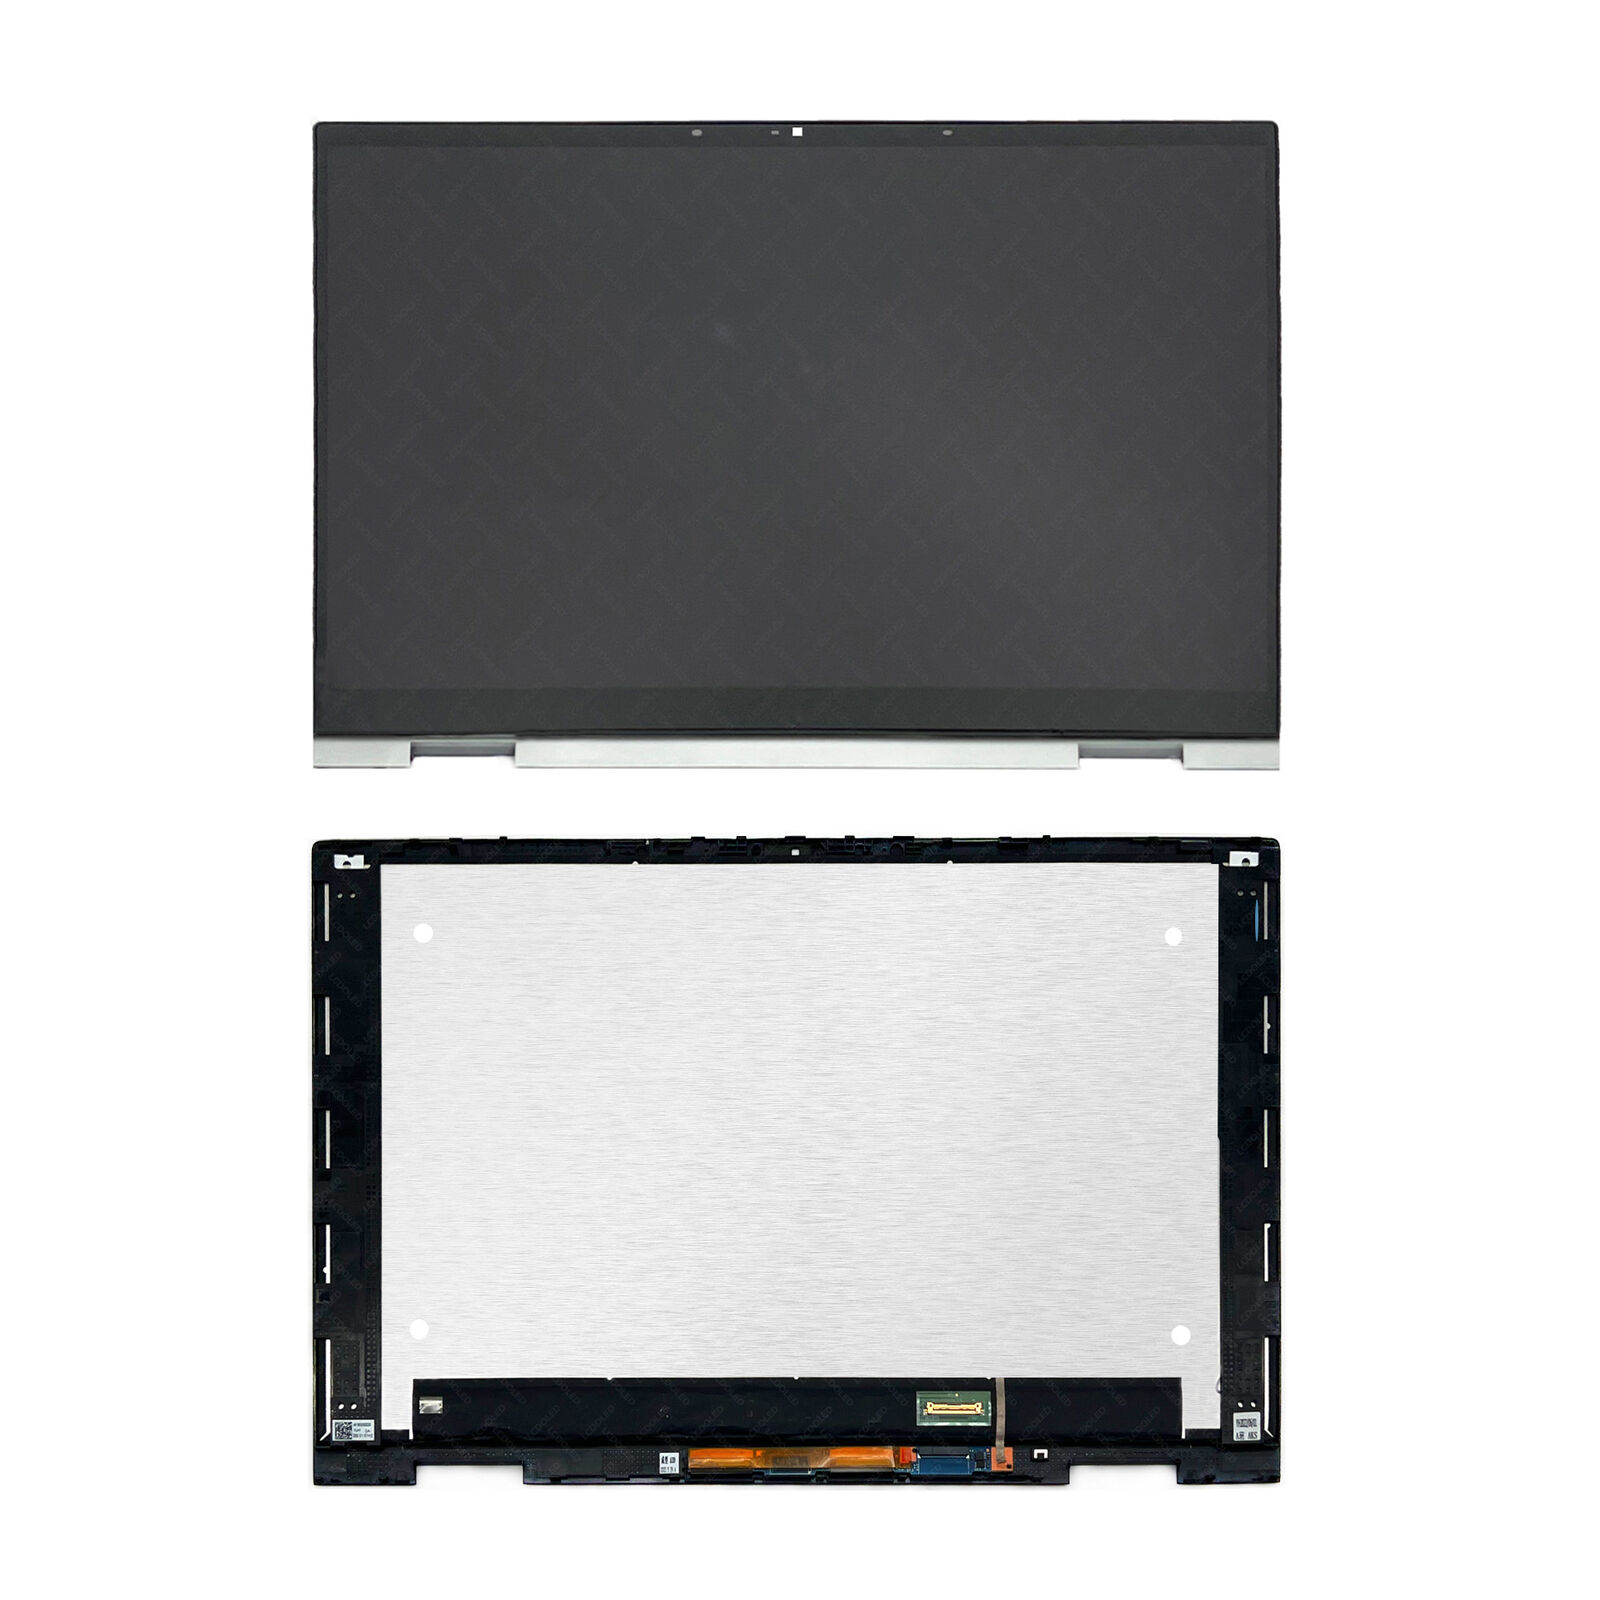 N10353-001 15.6 LCD TouchScreen Assembly for HP Envy x360 15-ew 15t-ew 15t-ew000